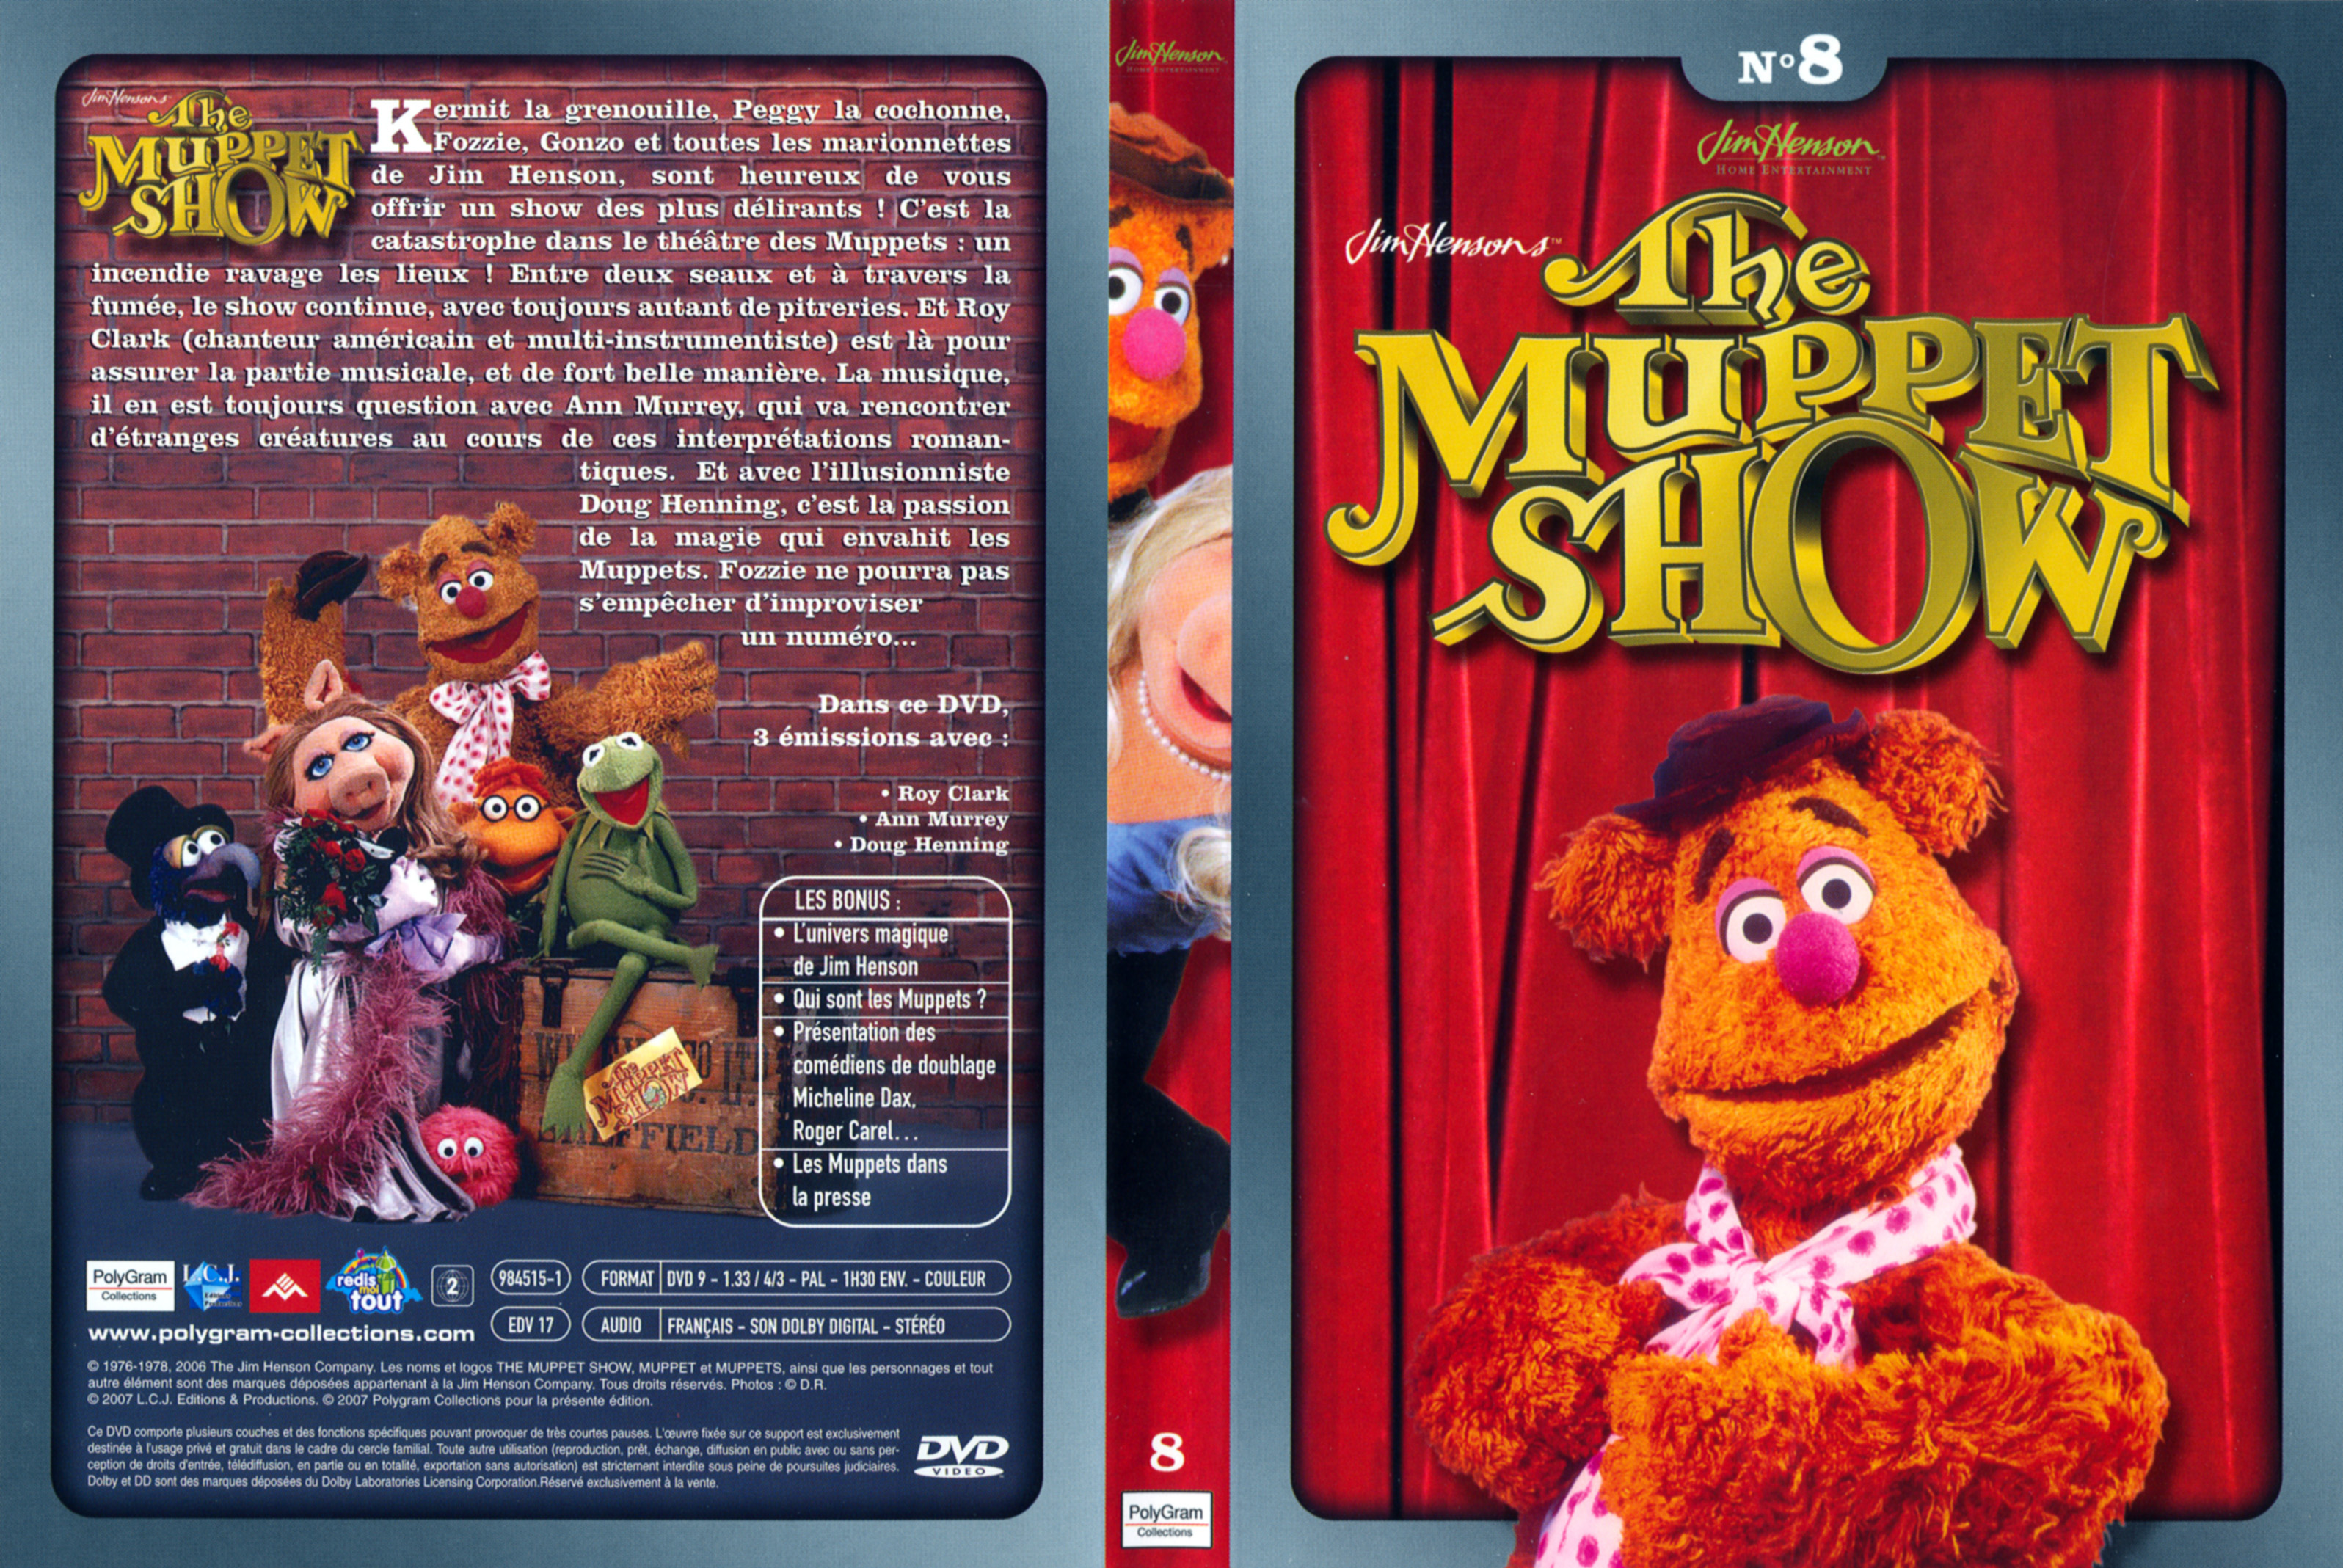 Jaquette DVD The muppet show vol 8